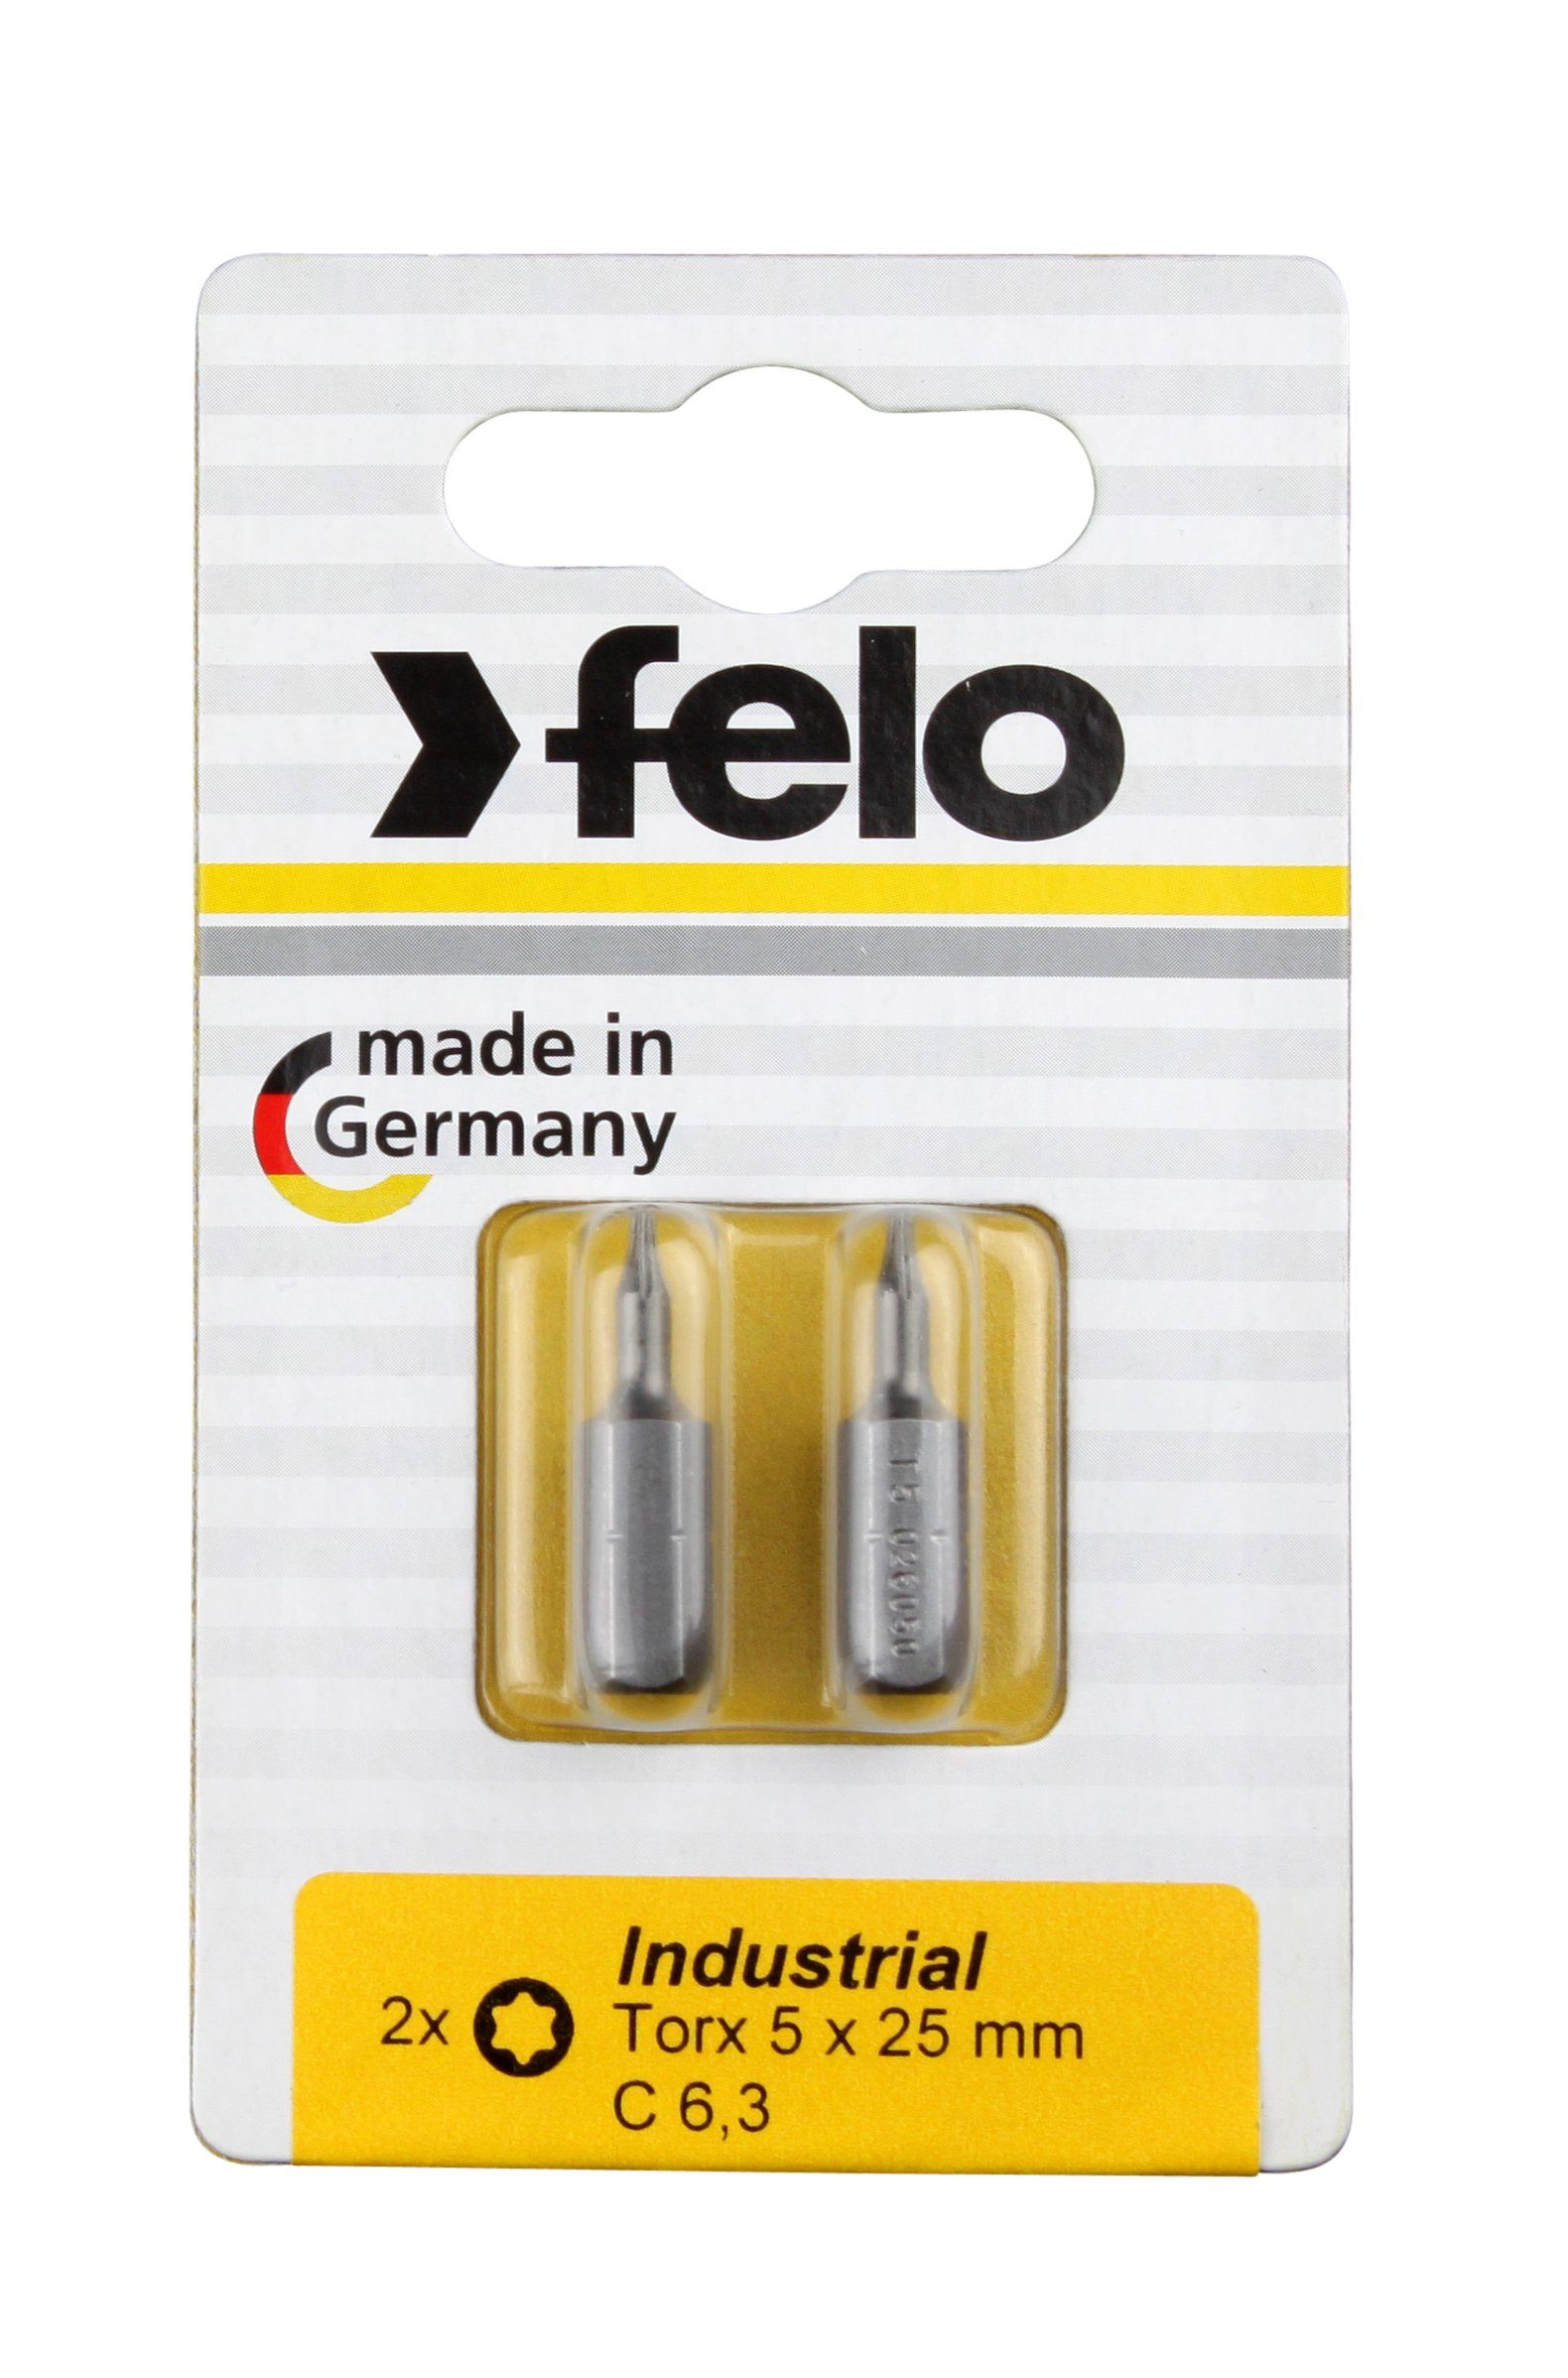 Felo Torx-Bit Felo Bit, Industrie C 6,3 x 25mm, 2 Stk auf Karte 2x Tx 6